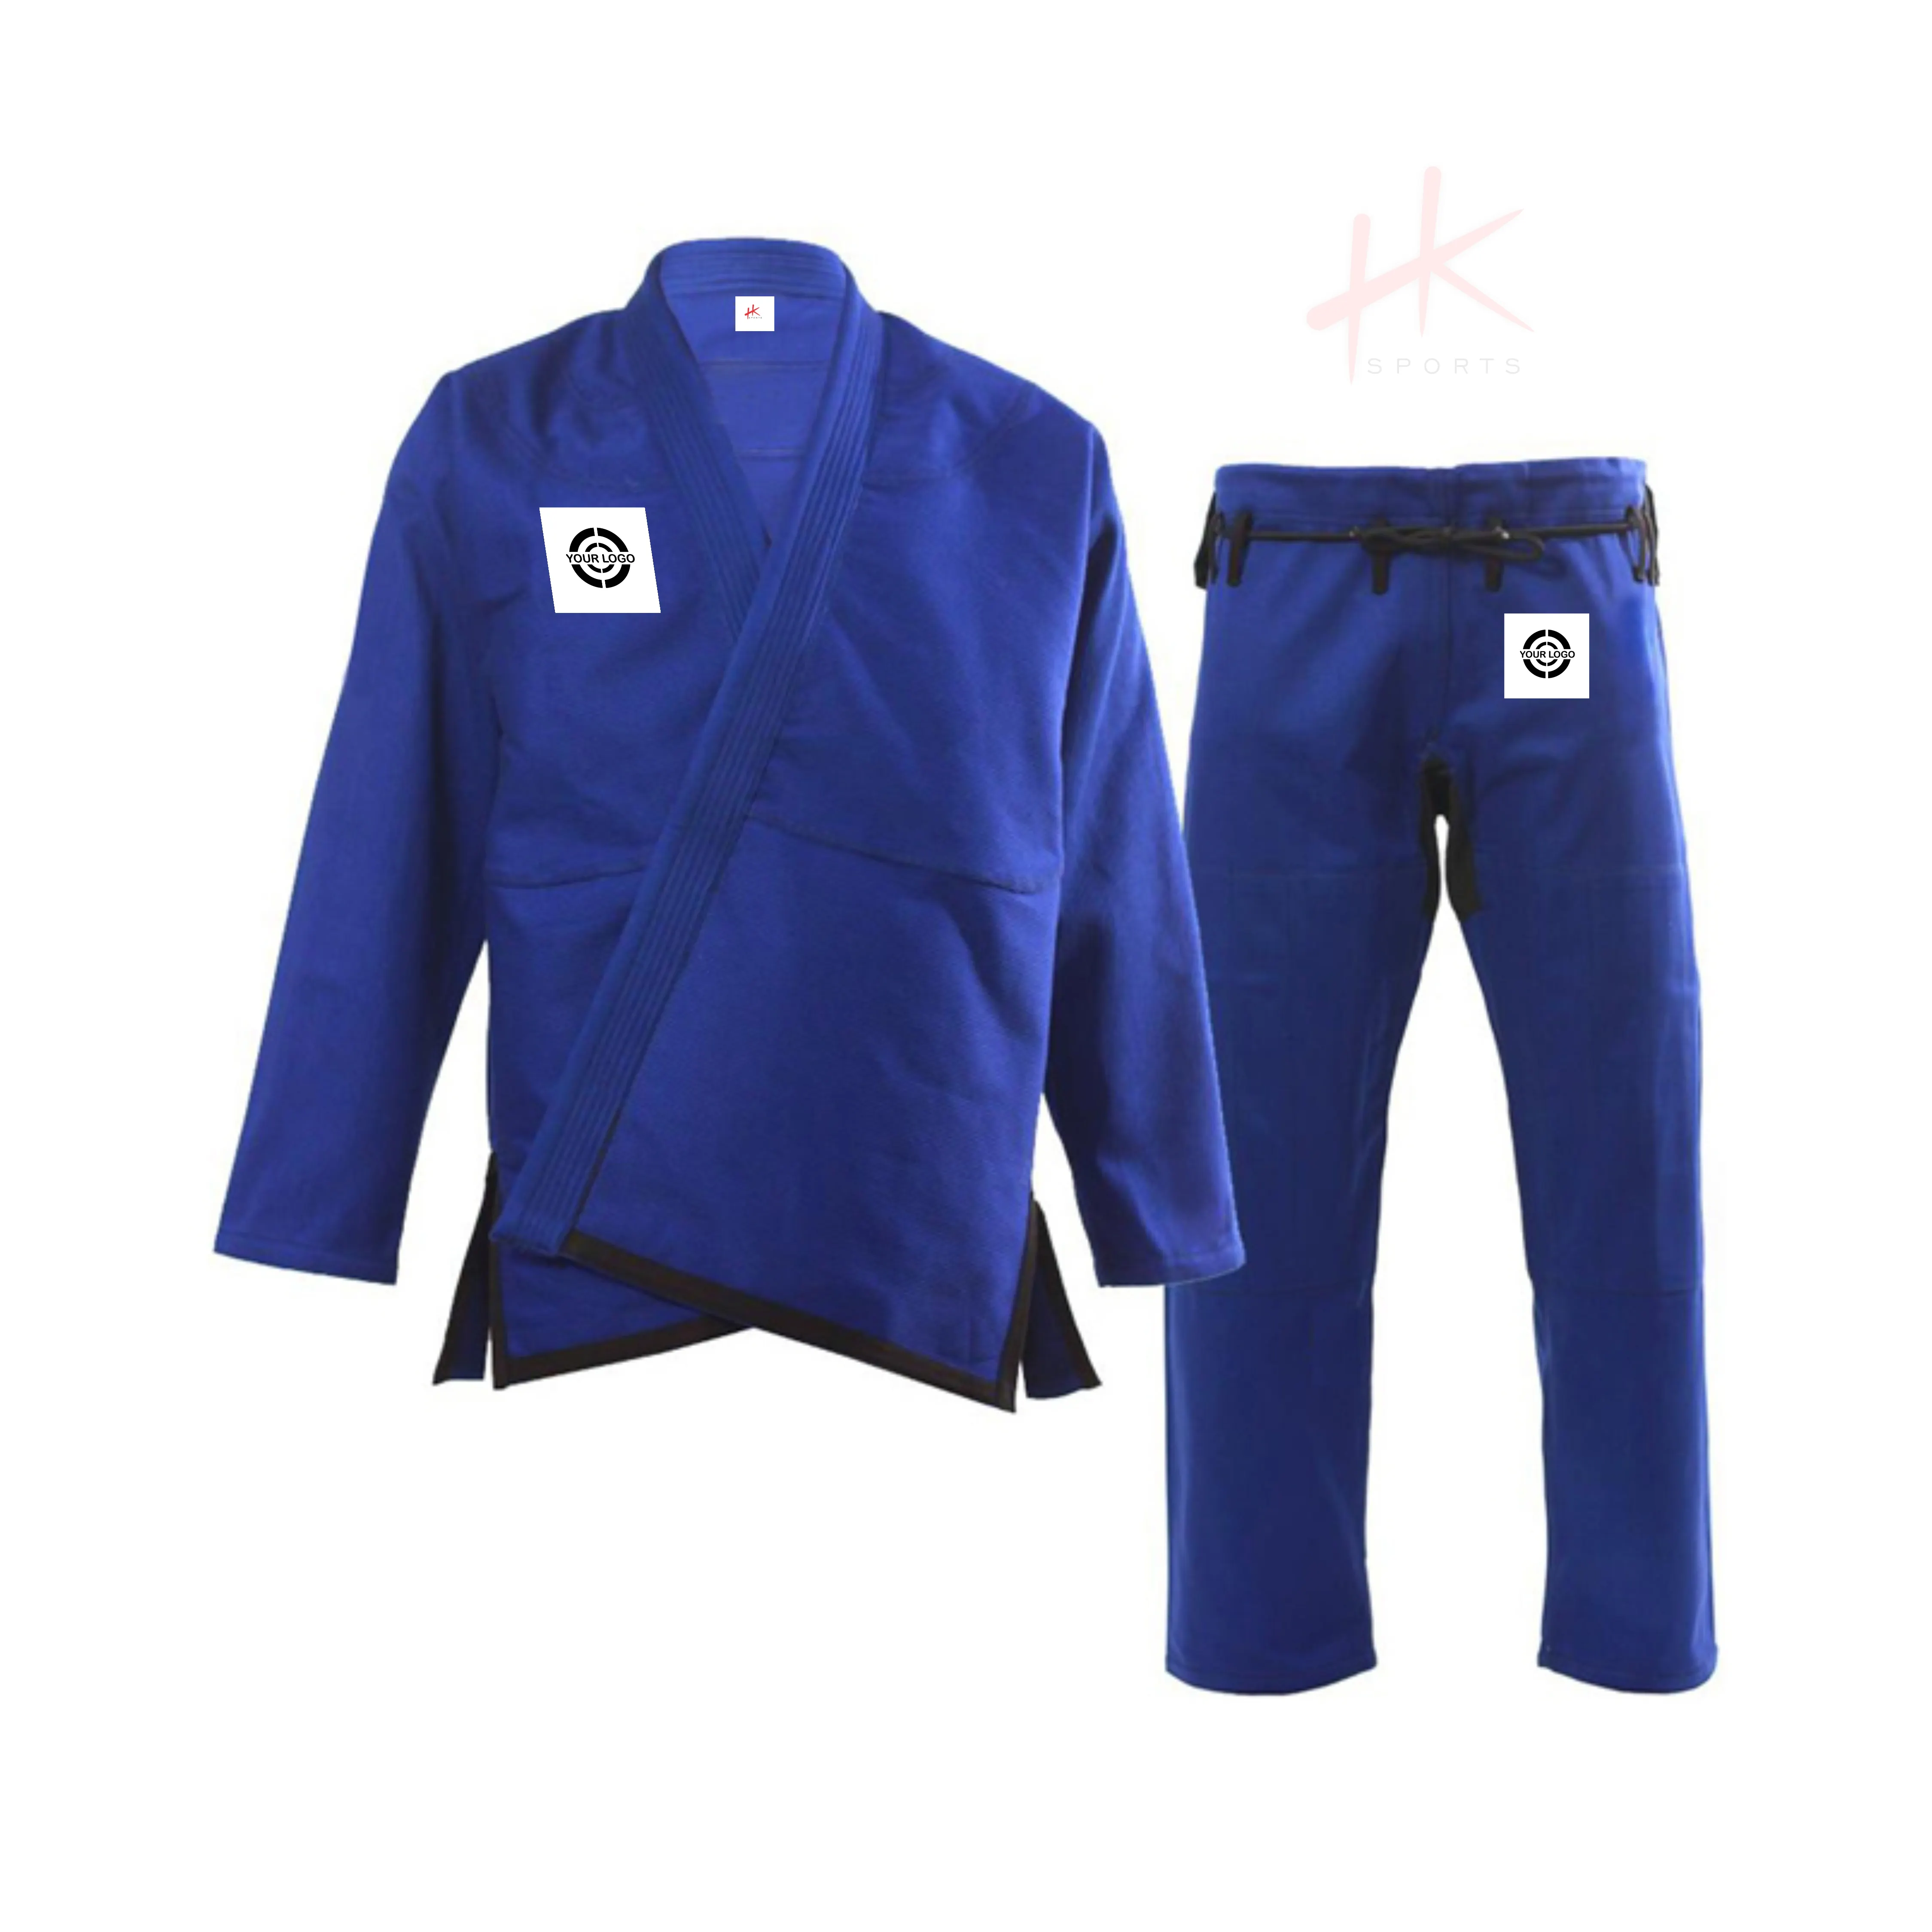 Professional Top Quality Cotton Custom Brazilian Jiu-Jitsu/BJJ Gi Blue Martial Arts Uniform /bjj gi competition